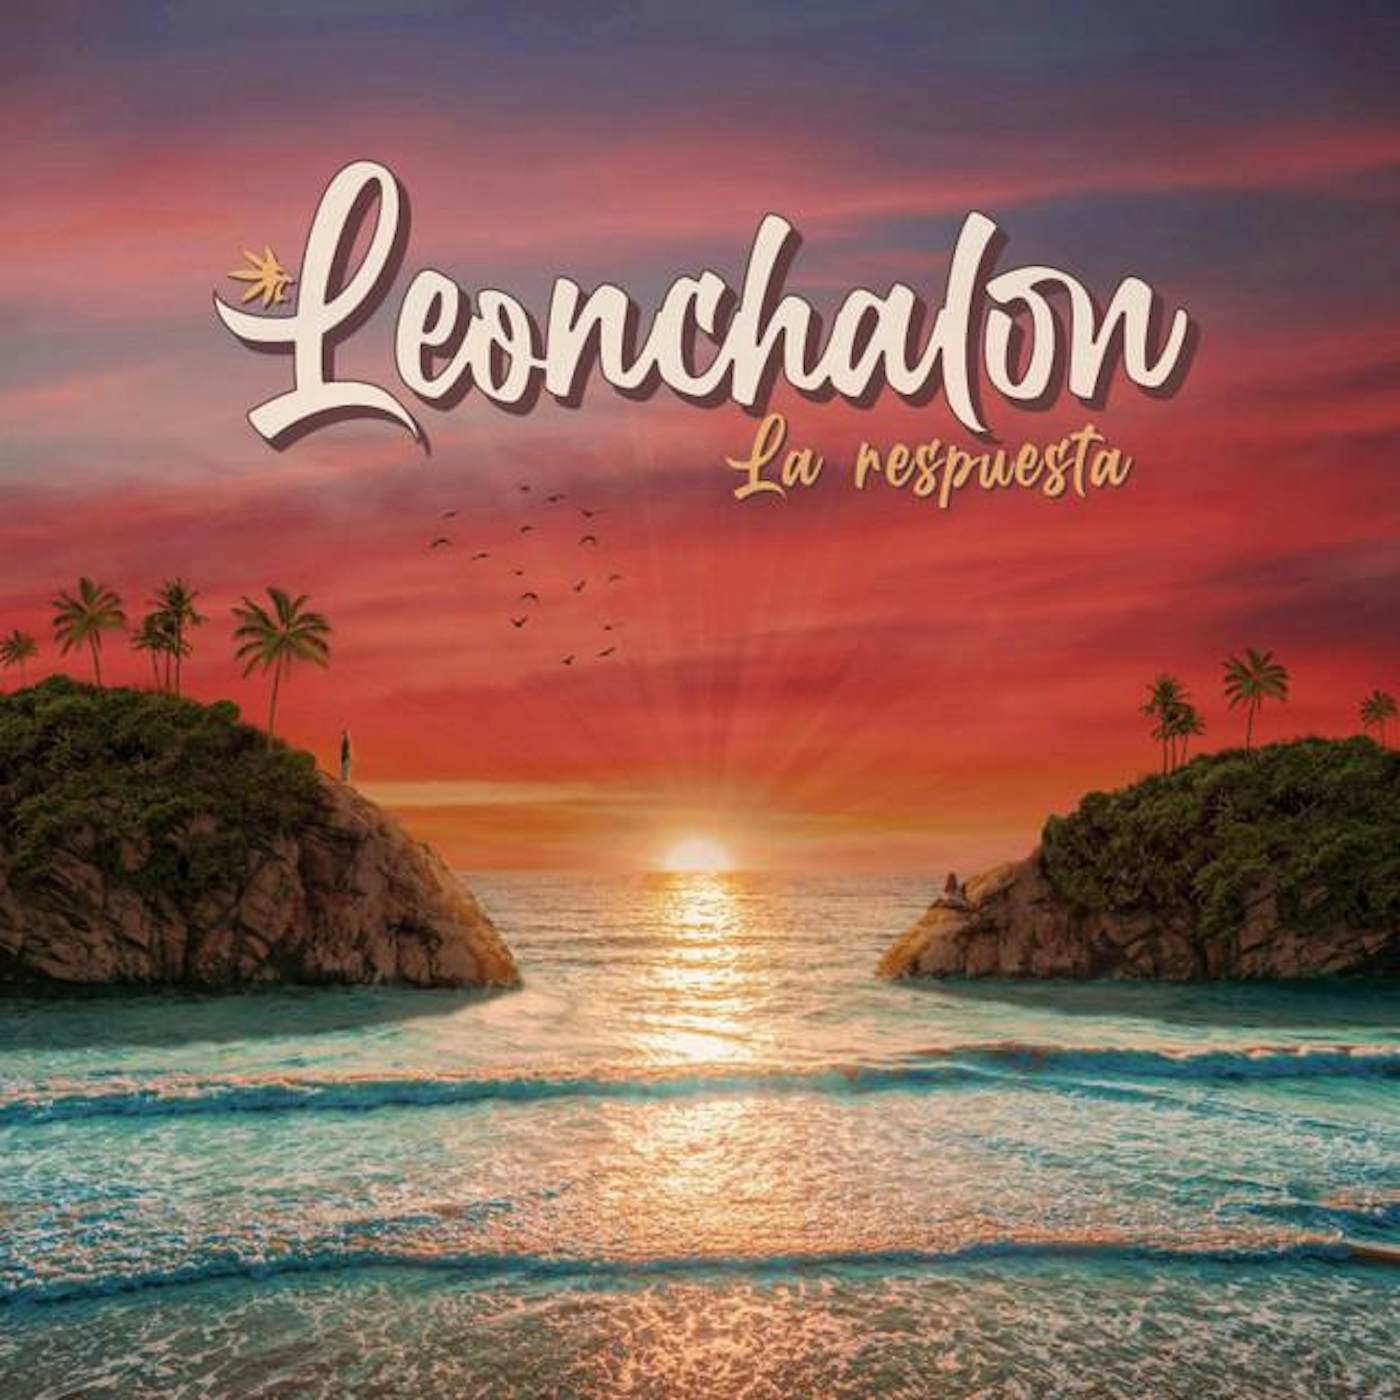 Leonchalon